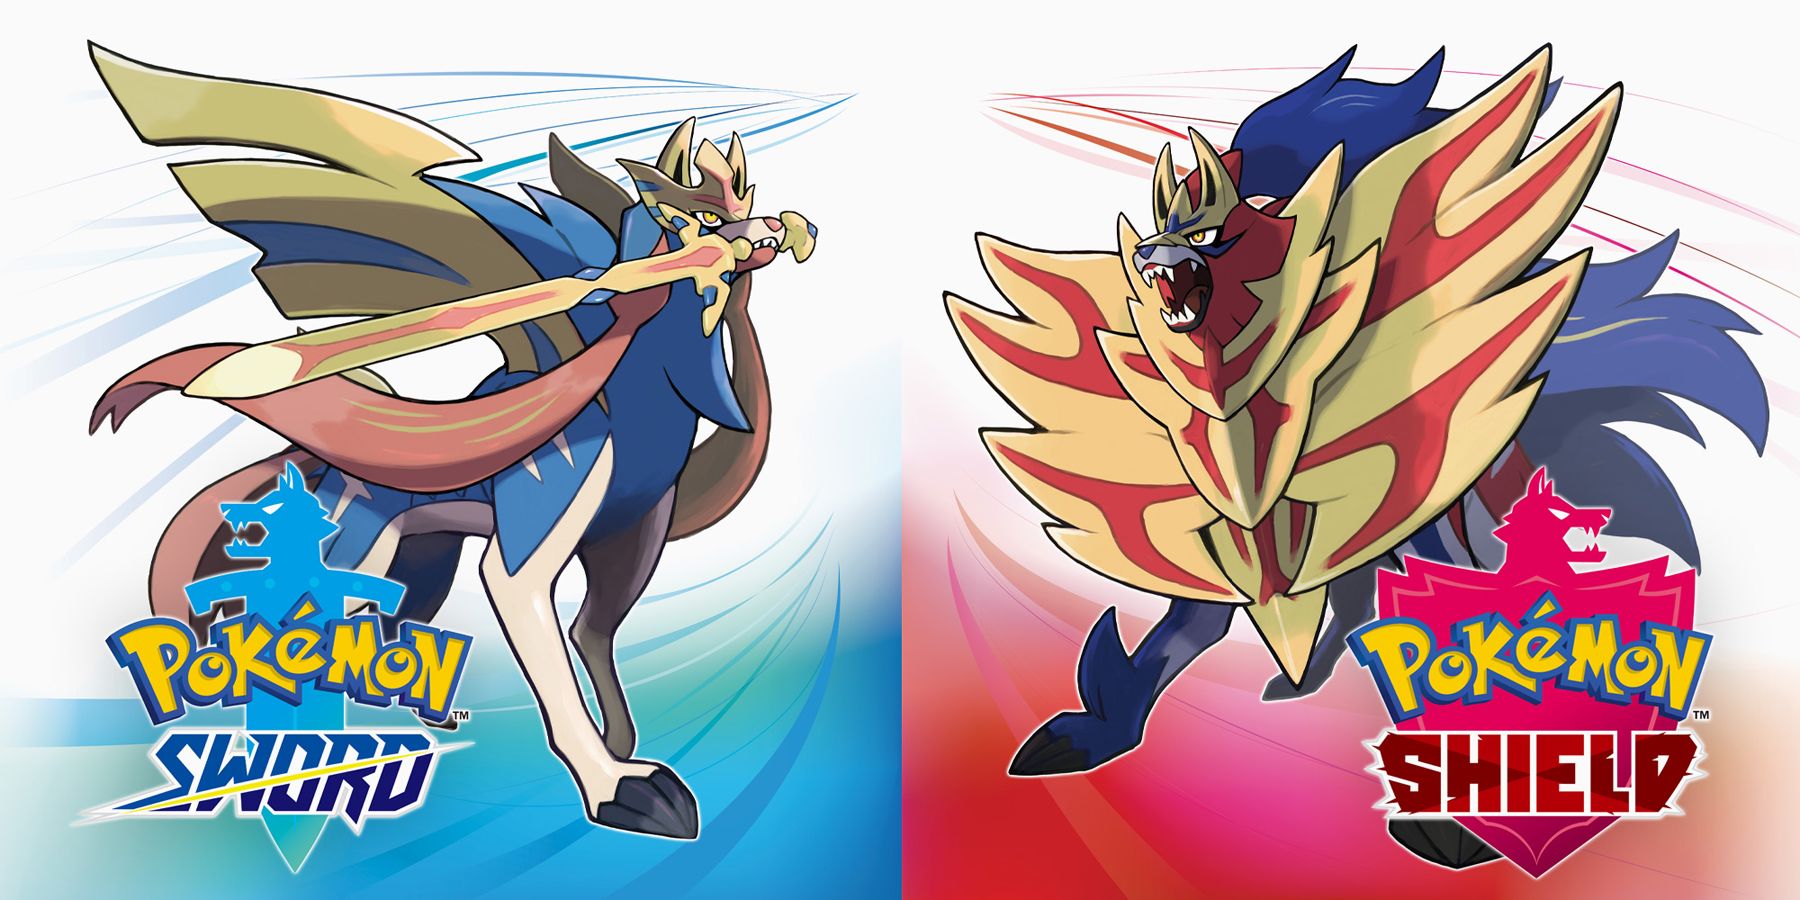 Pokemon Sword and Pokemon Shield cover art